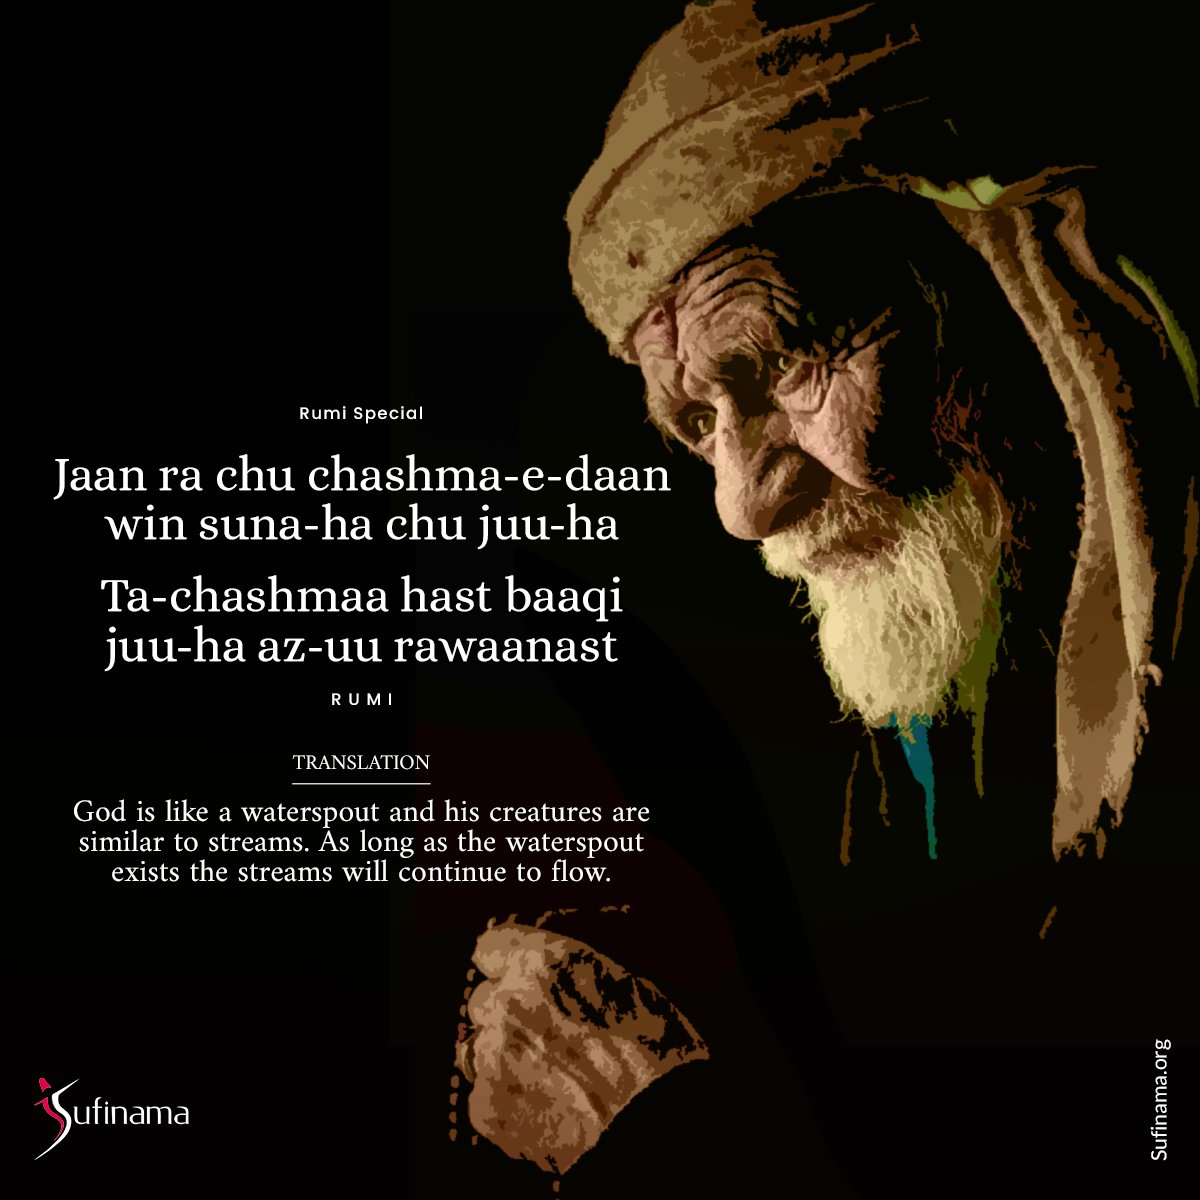 Rumi special by Sufinama #sufinama #sufism #sufi #rumispecial